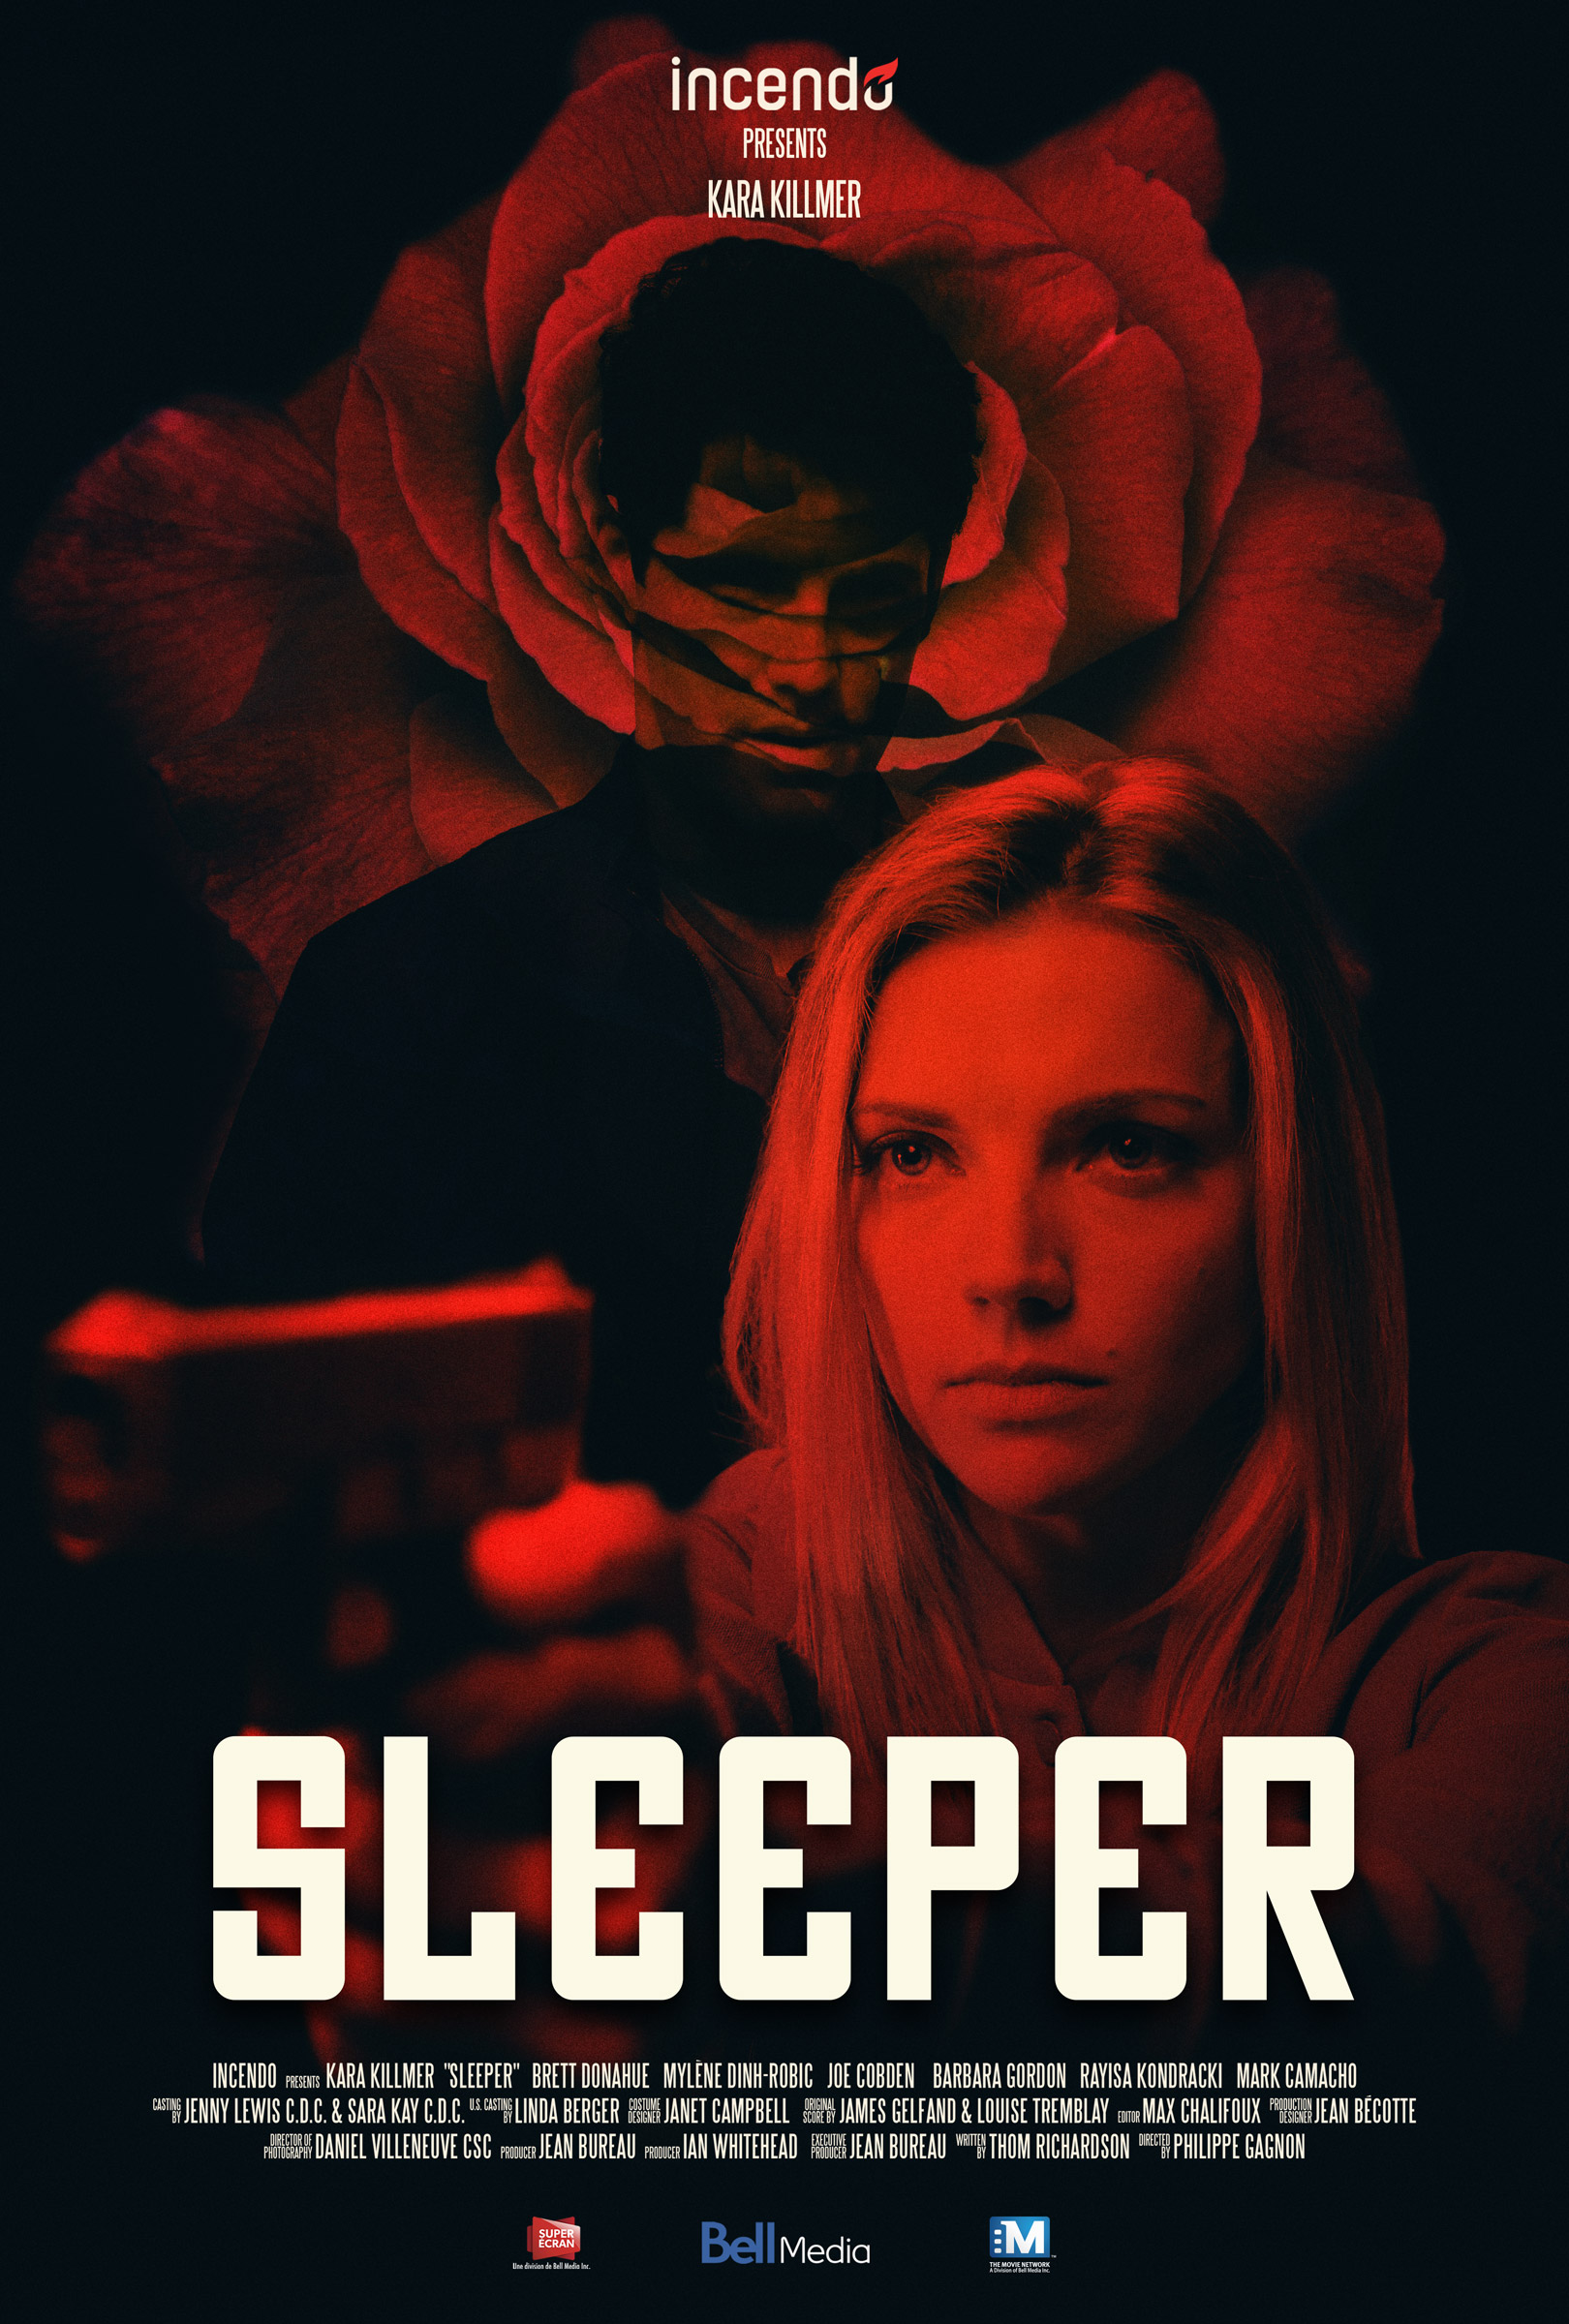 Nonton film Sleeper layarkaca21 indoxx1 ganool online streaming terbaru